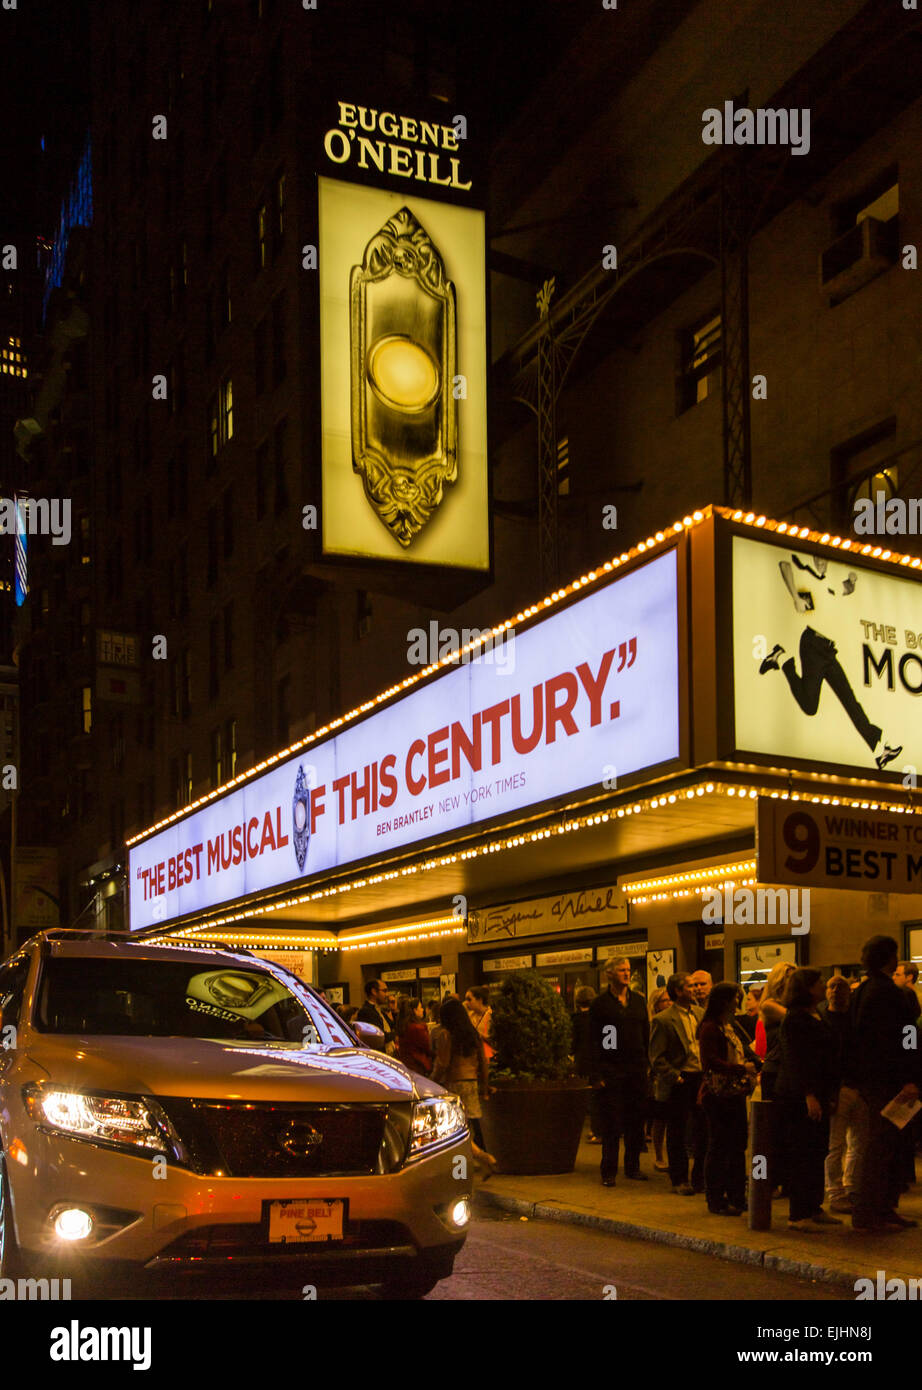 L'Eugene O'Neill theatre la nuit, New York City, USA Banque D'Images